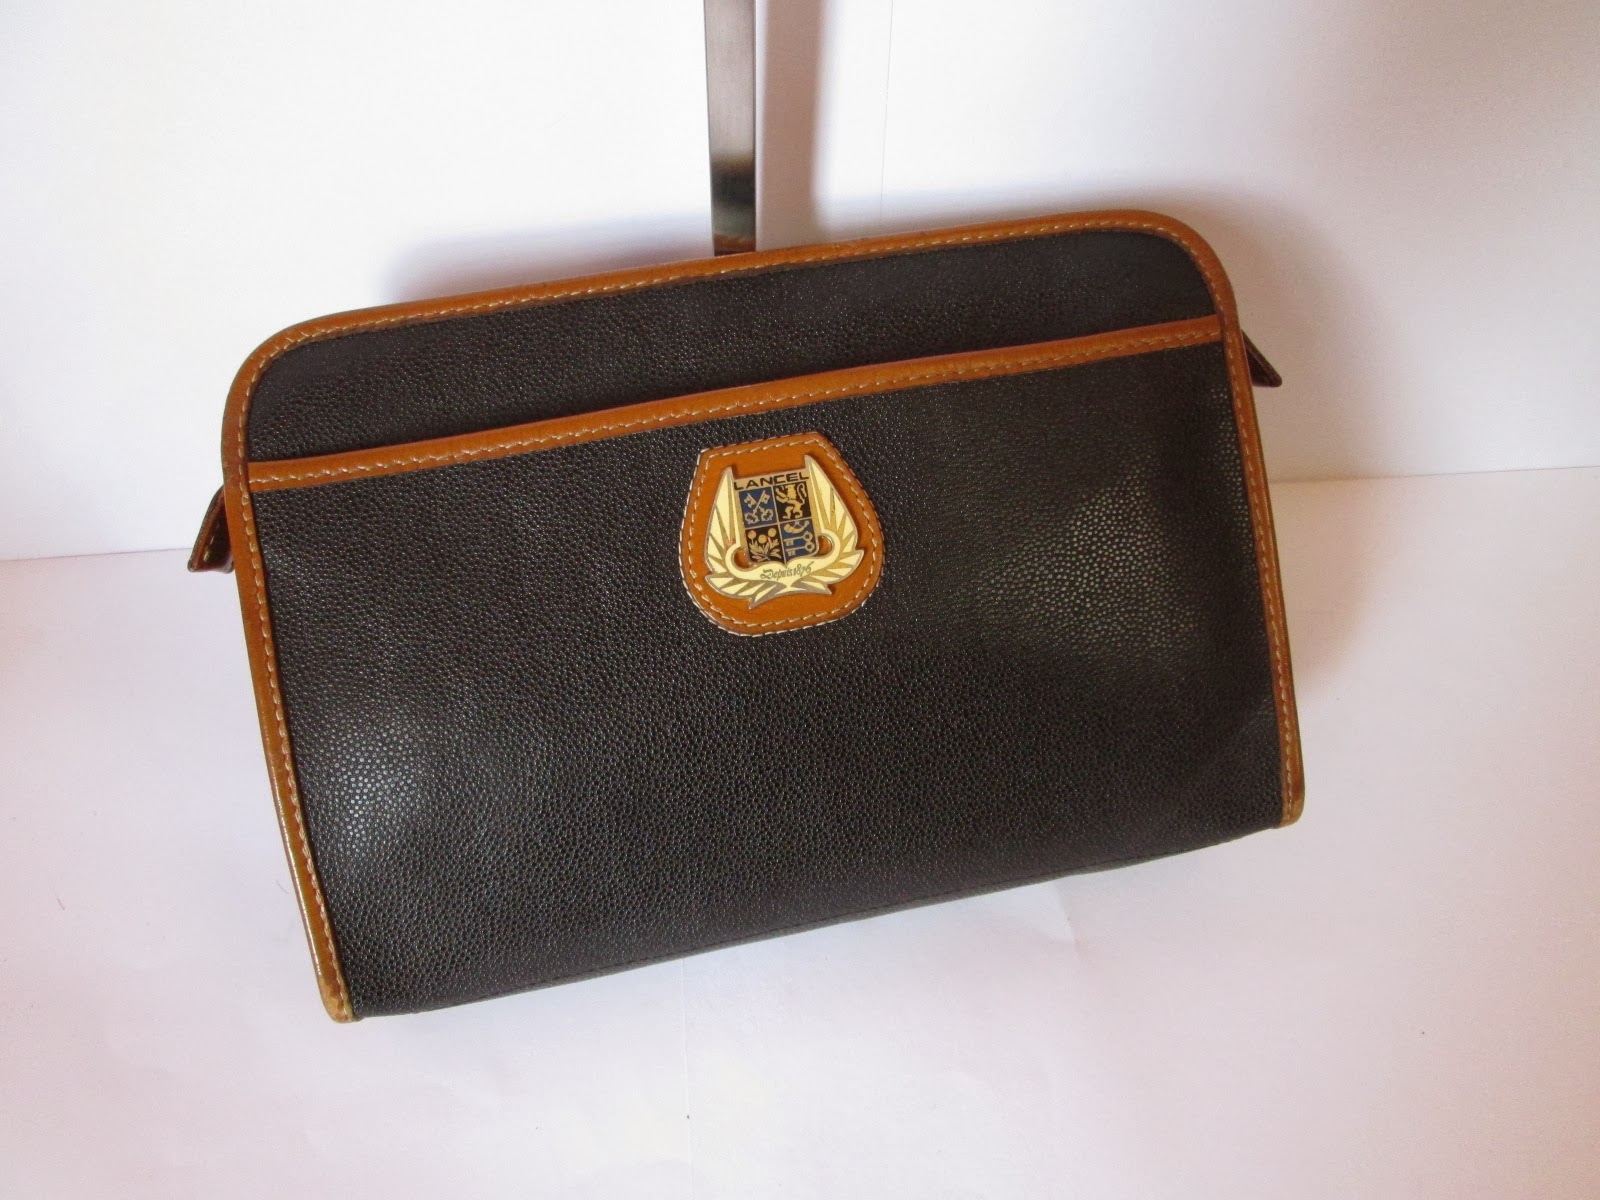 d0rayakEEbaG: Authentic LANCEL Paris Clutch bag(SOLD)